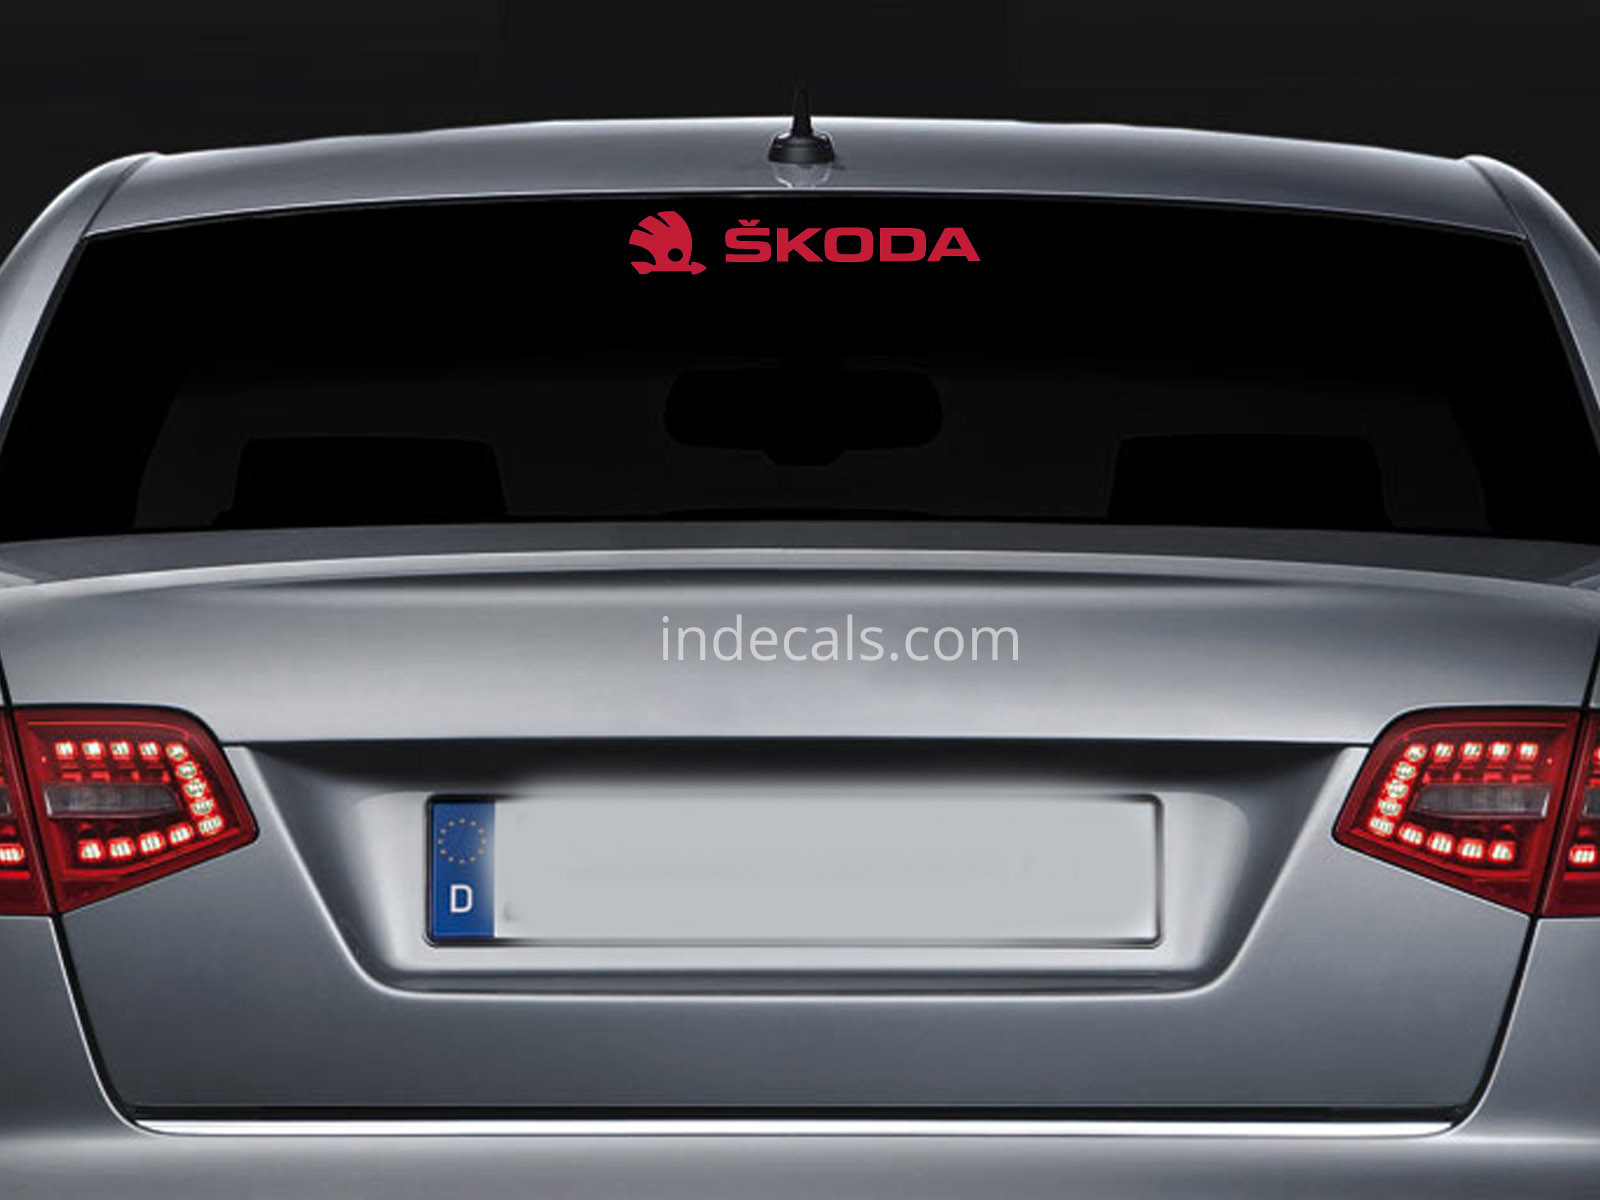 1 x Skoda Sticker for Windshield or Back Window - Red